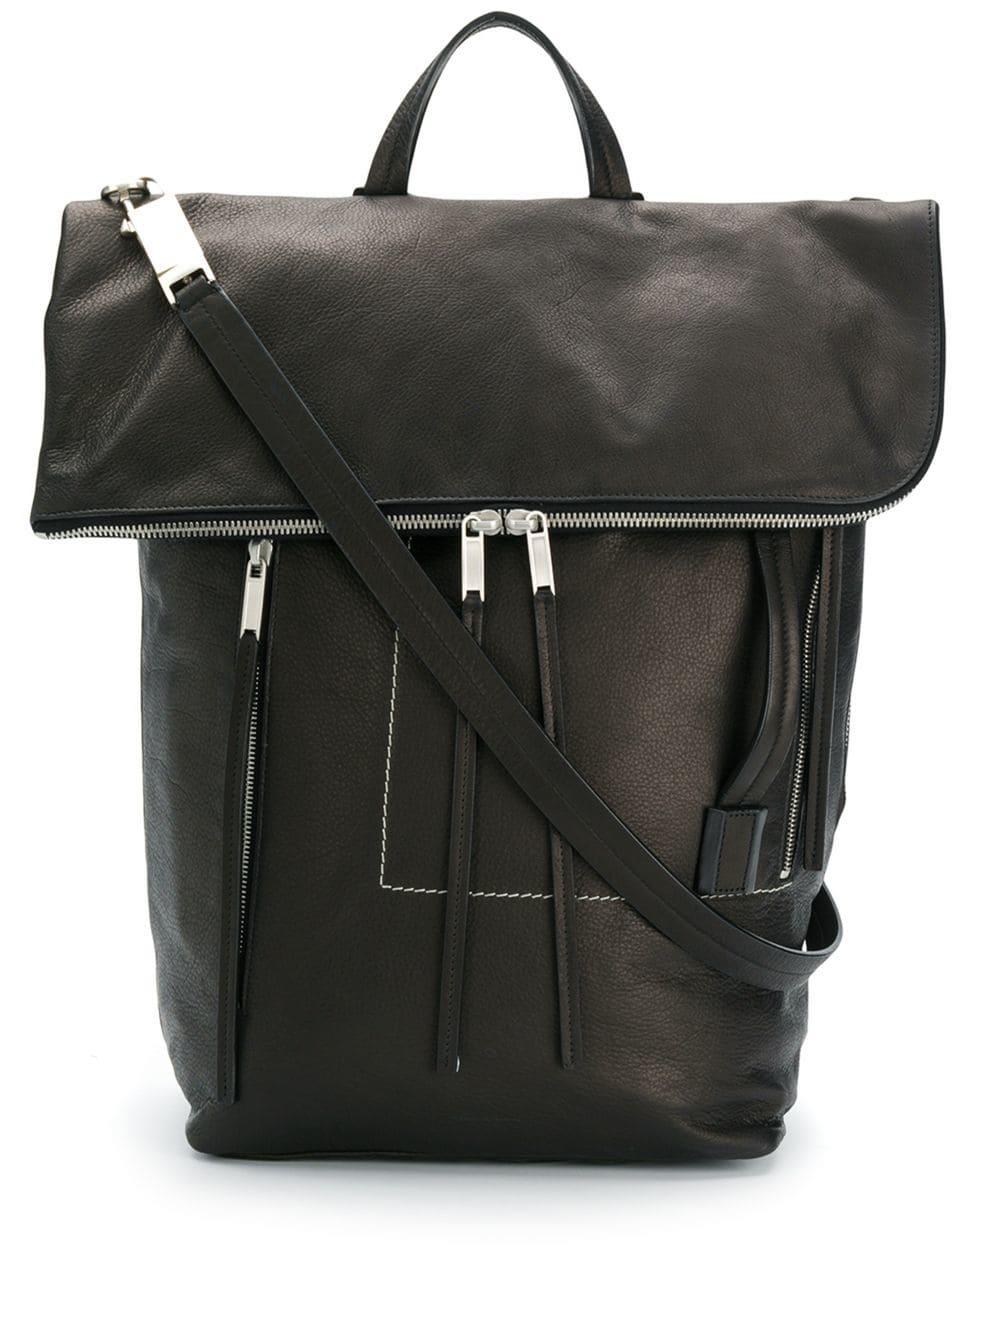 Rick Owens Medium Leather Backpack in Black for Men - Lyst